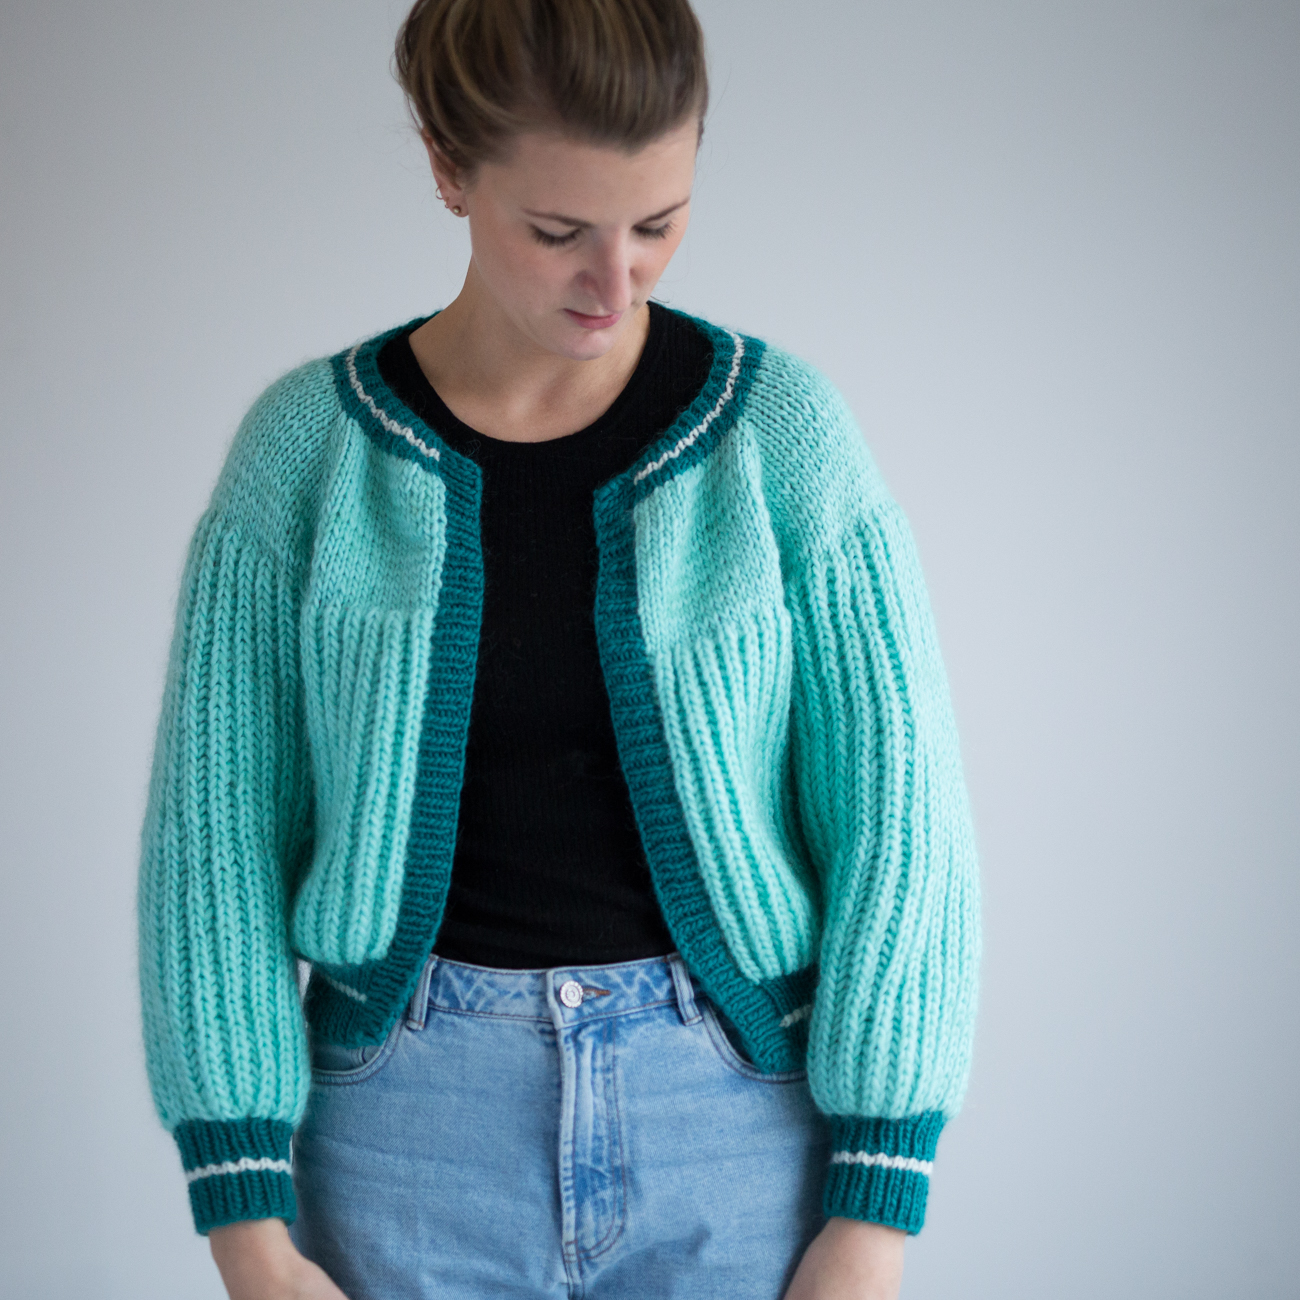  - Groove jacket | Knitting pattern bomber jacket - by HipKnitShop - 17/01/2019